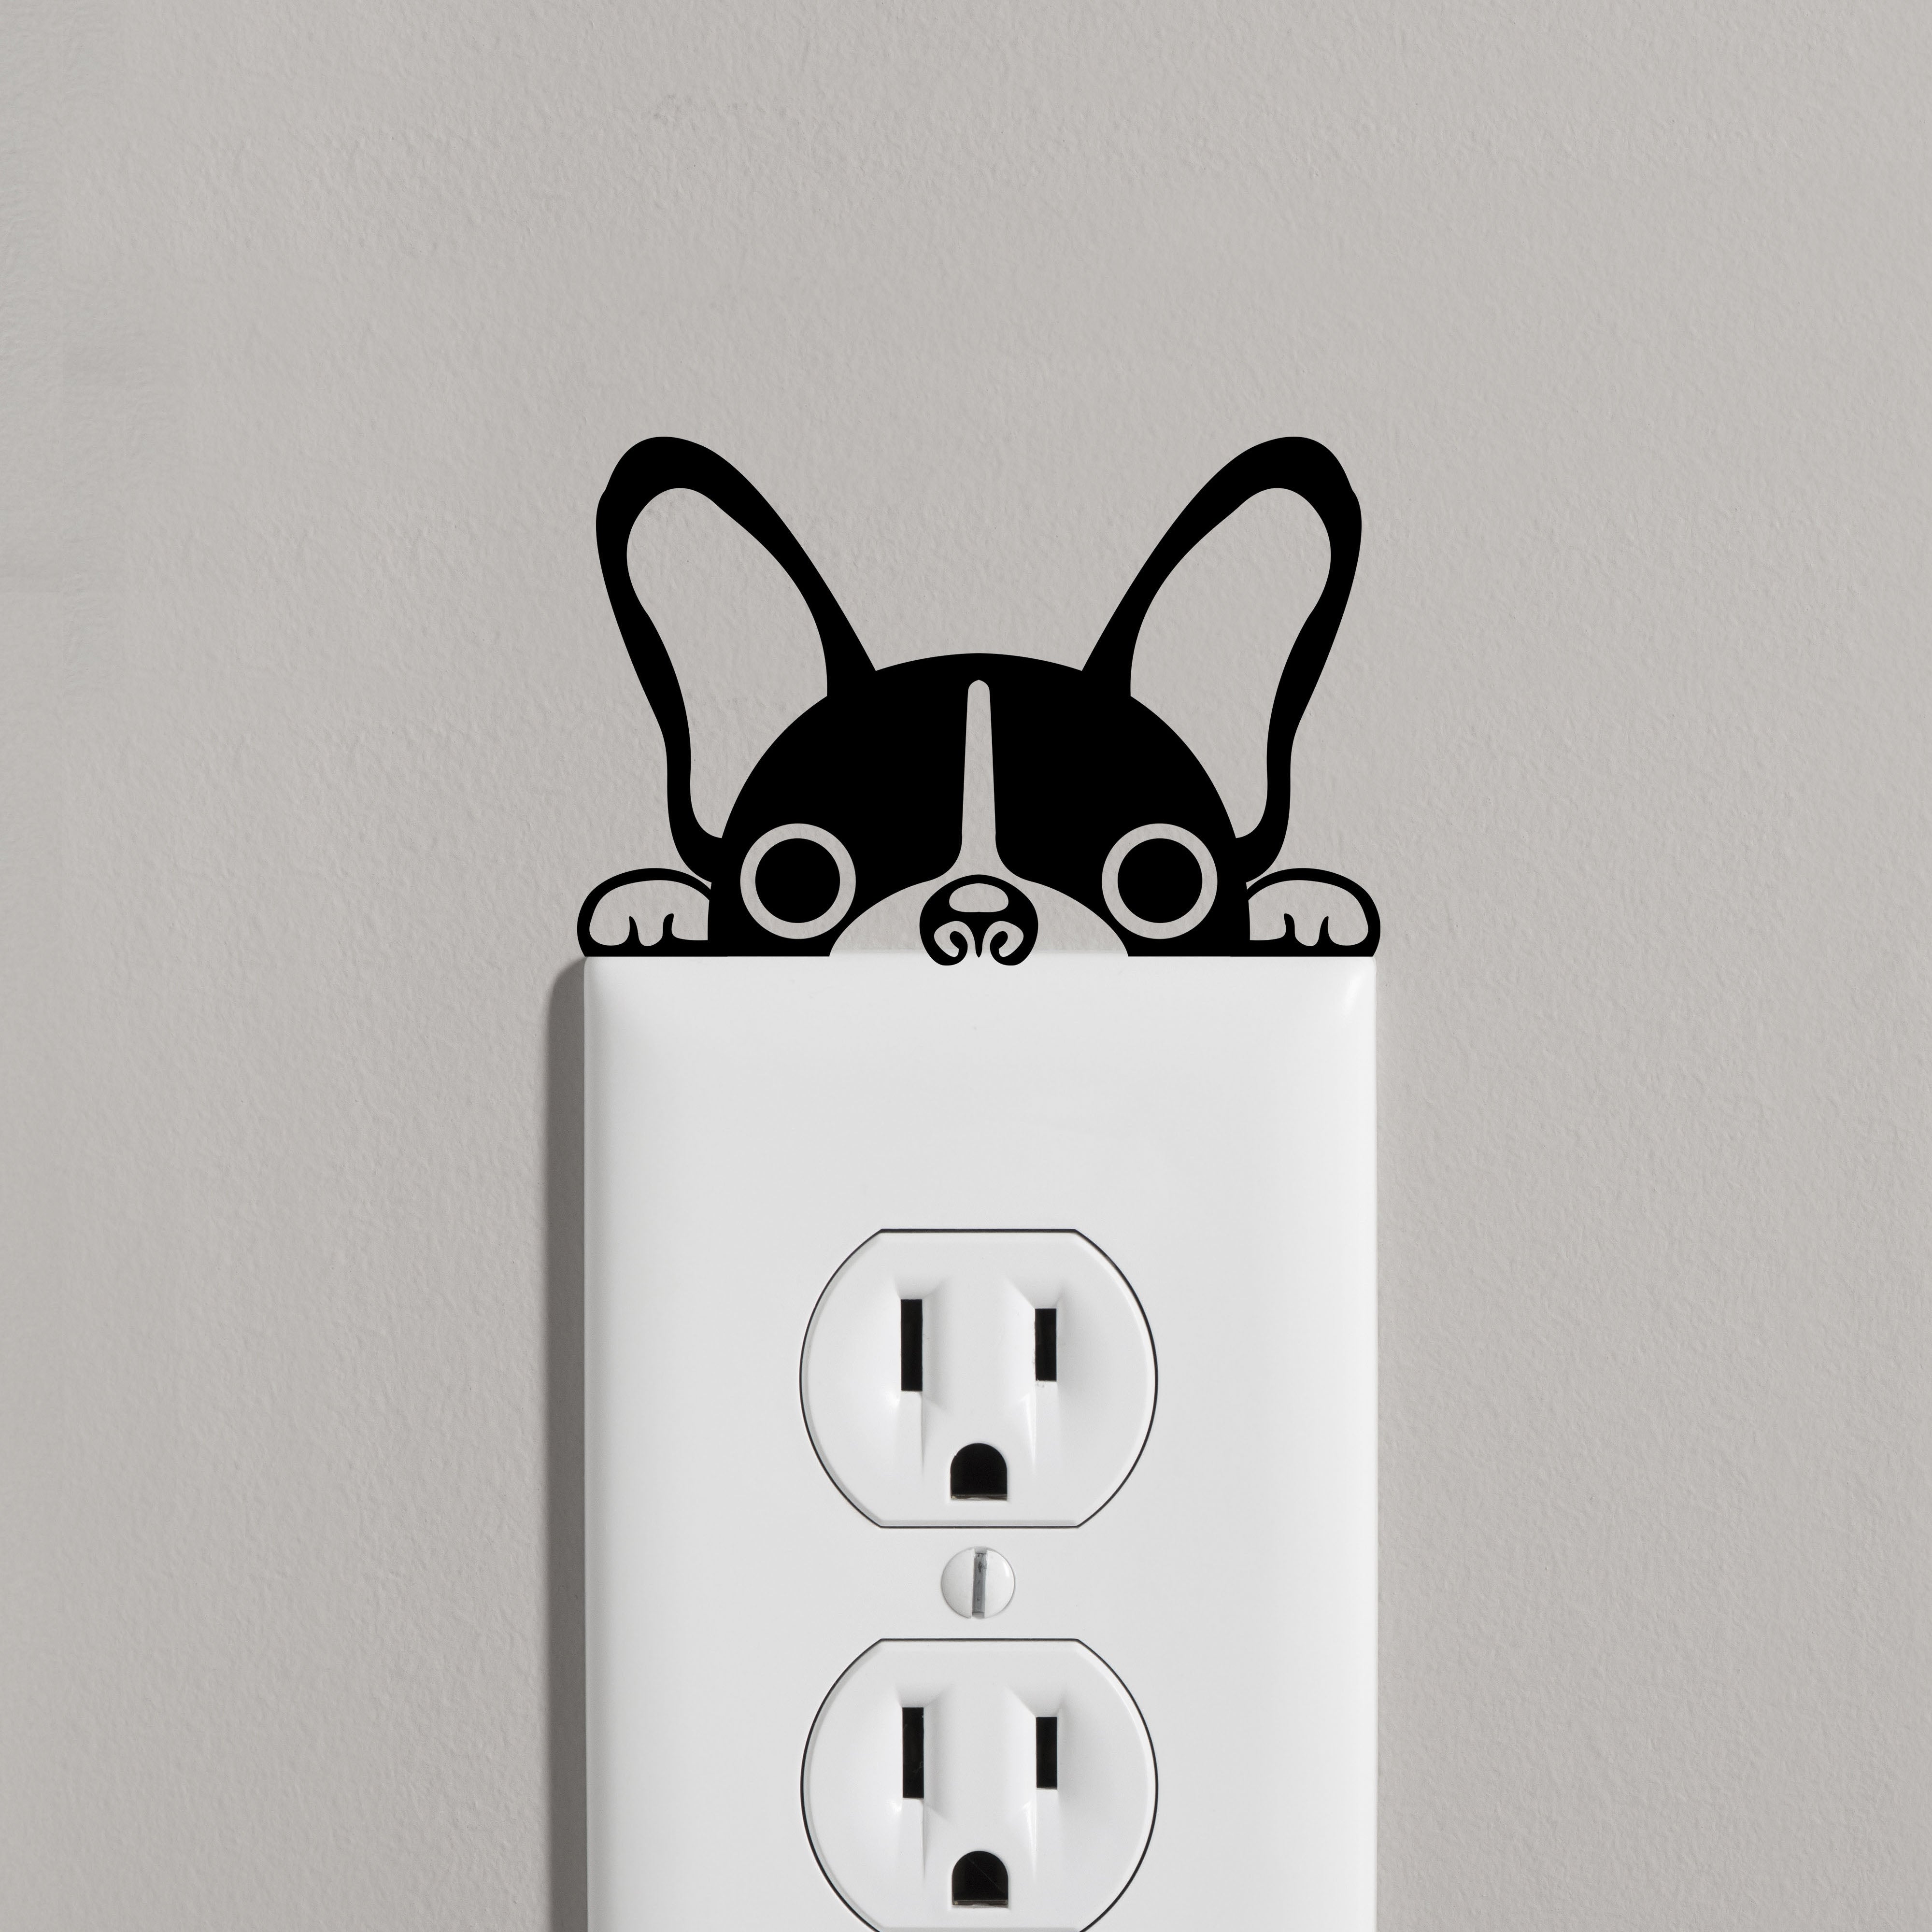 Cat and Dog Light Switch Set